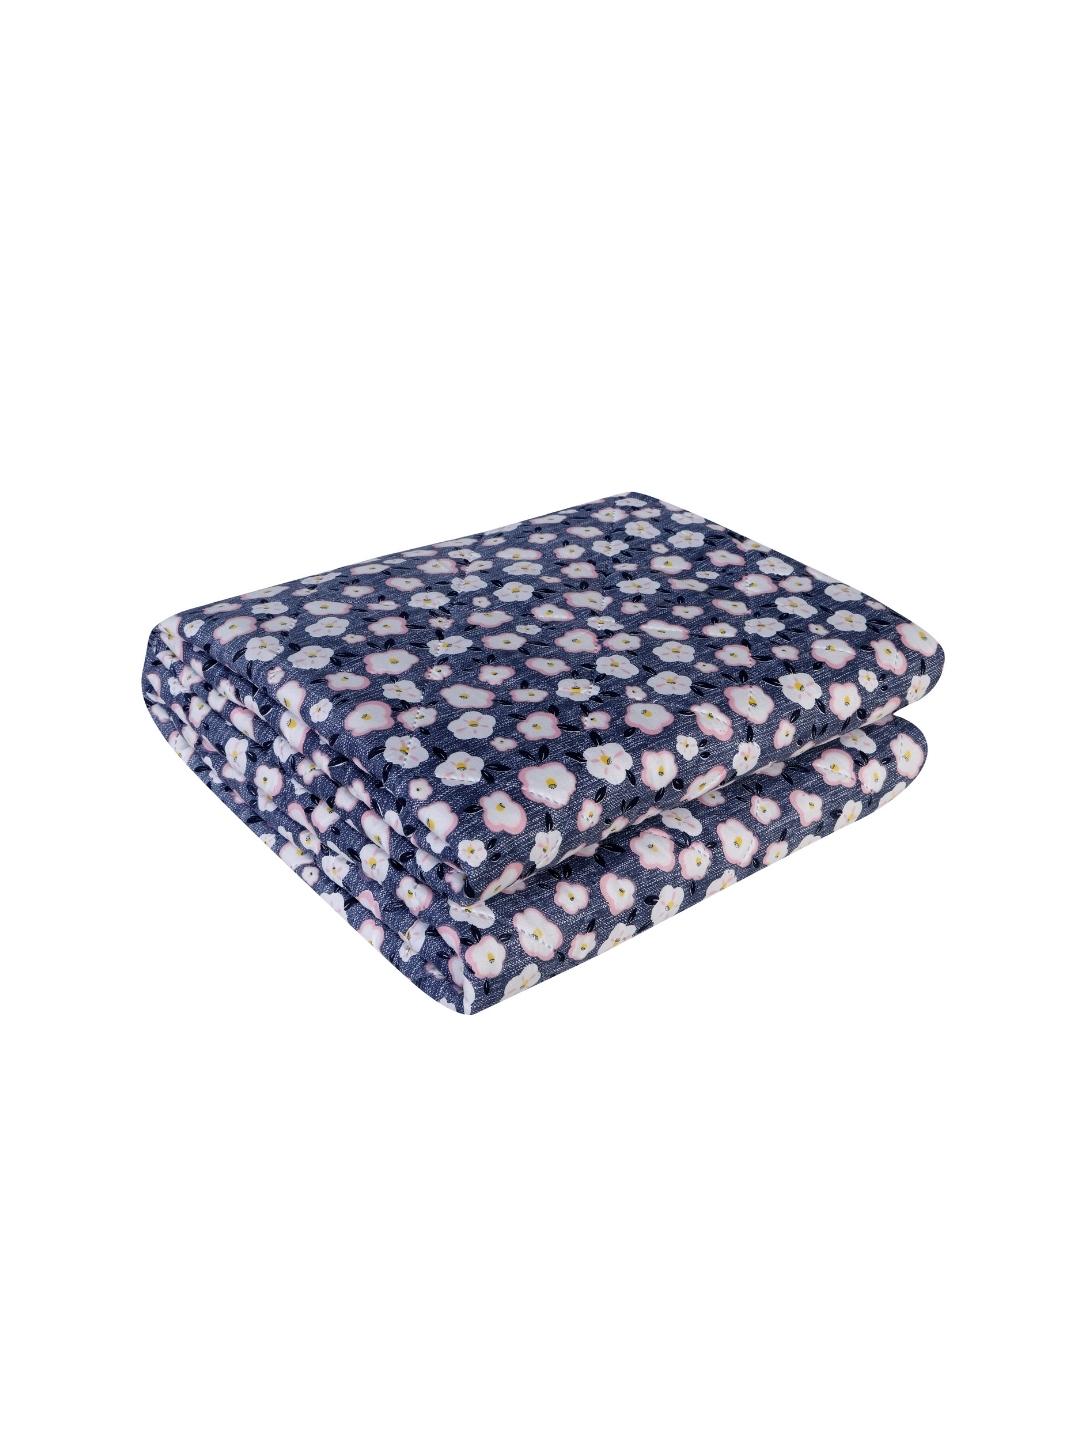 Floral Print Set of 2 Single Bed Light Weight Comforter-Royal Blue